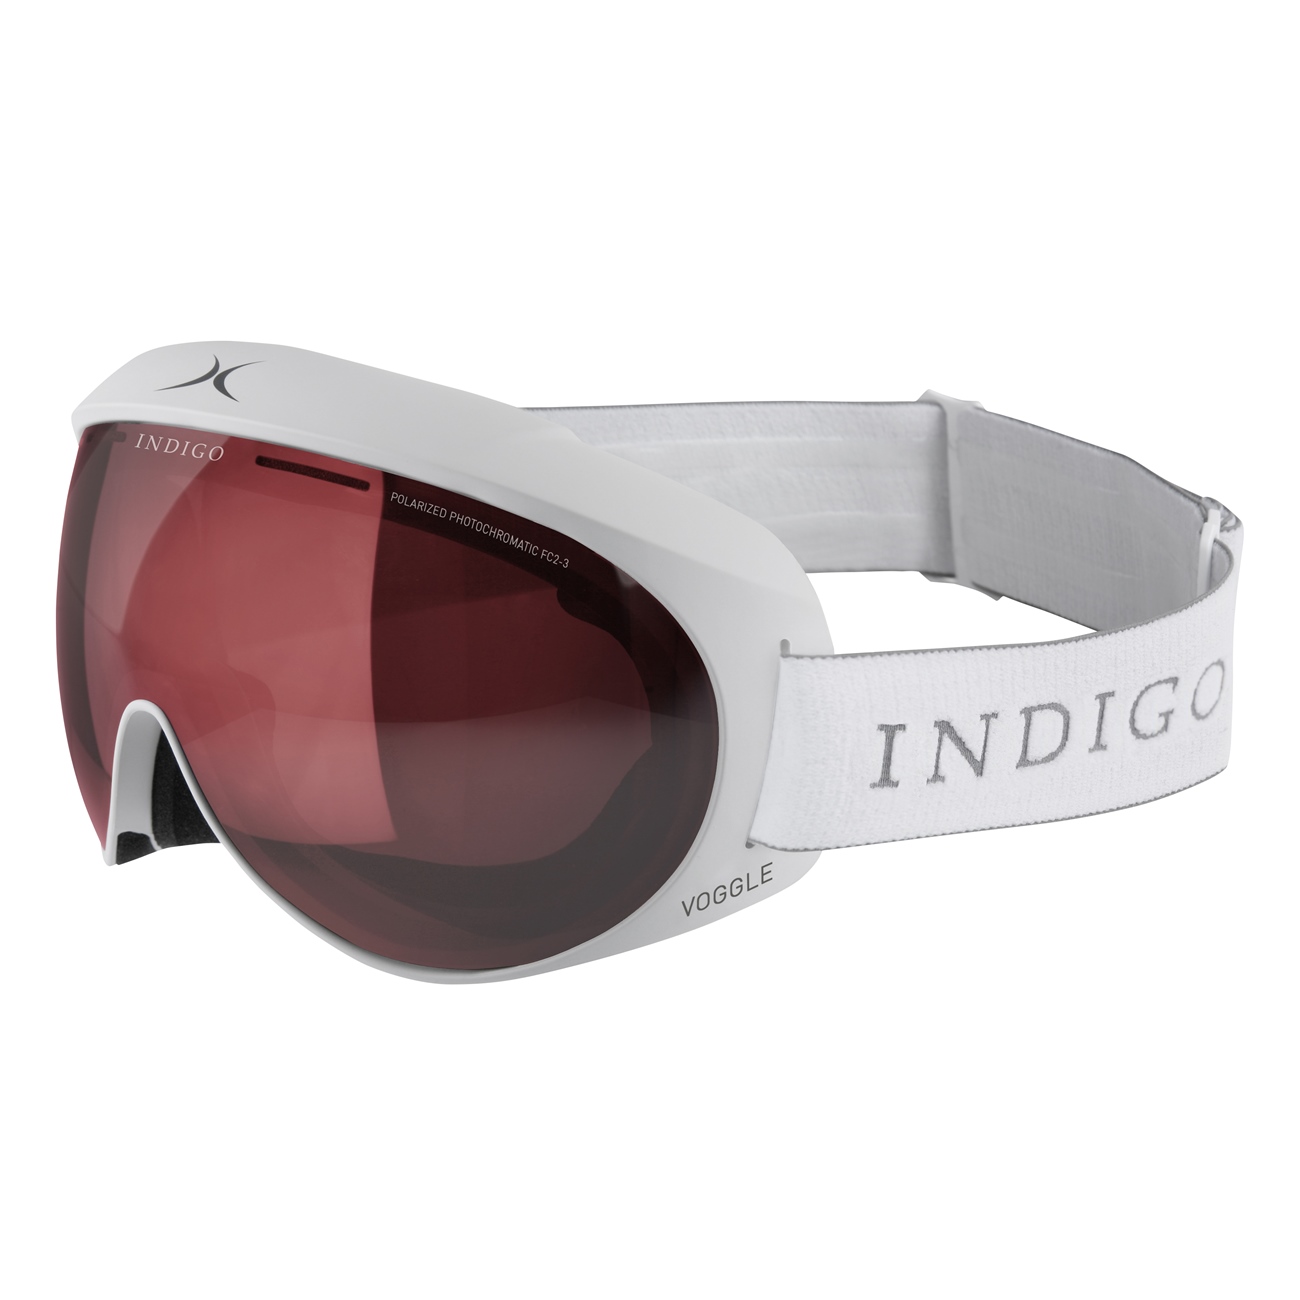 Indigo Skibrille Voggle Photochromatic Polarized weiß